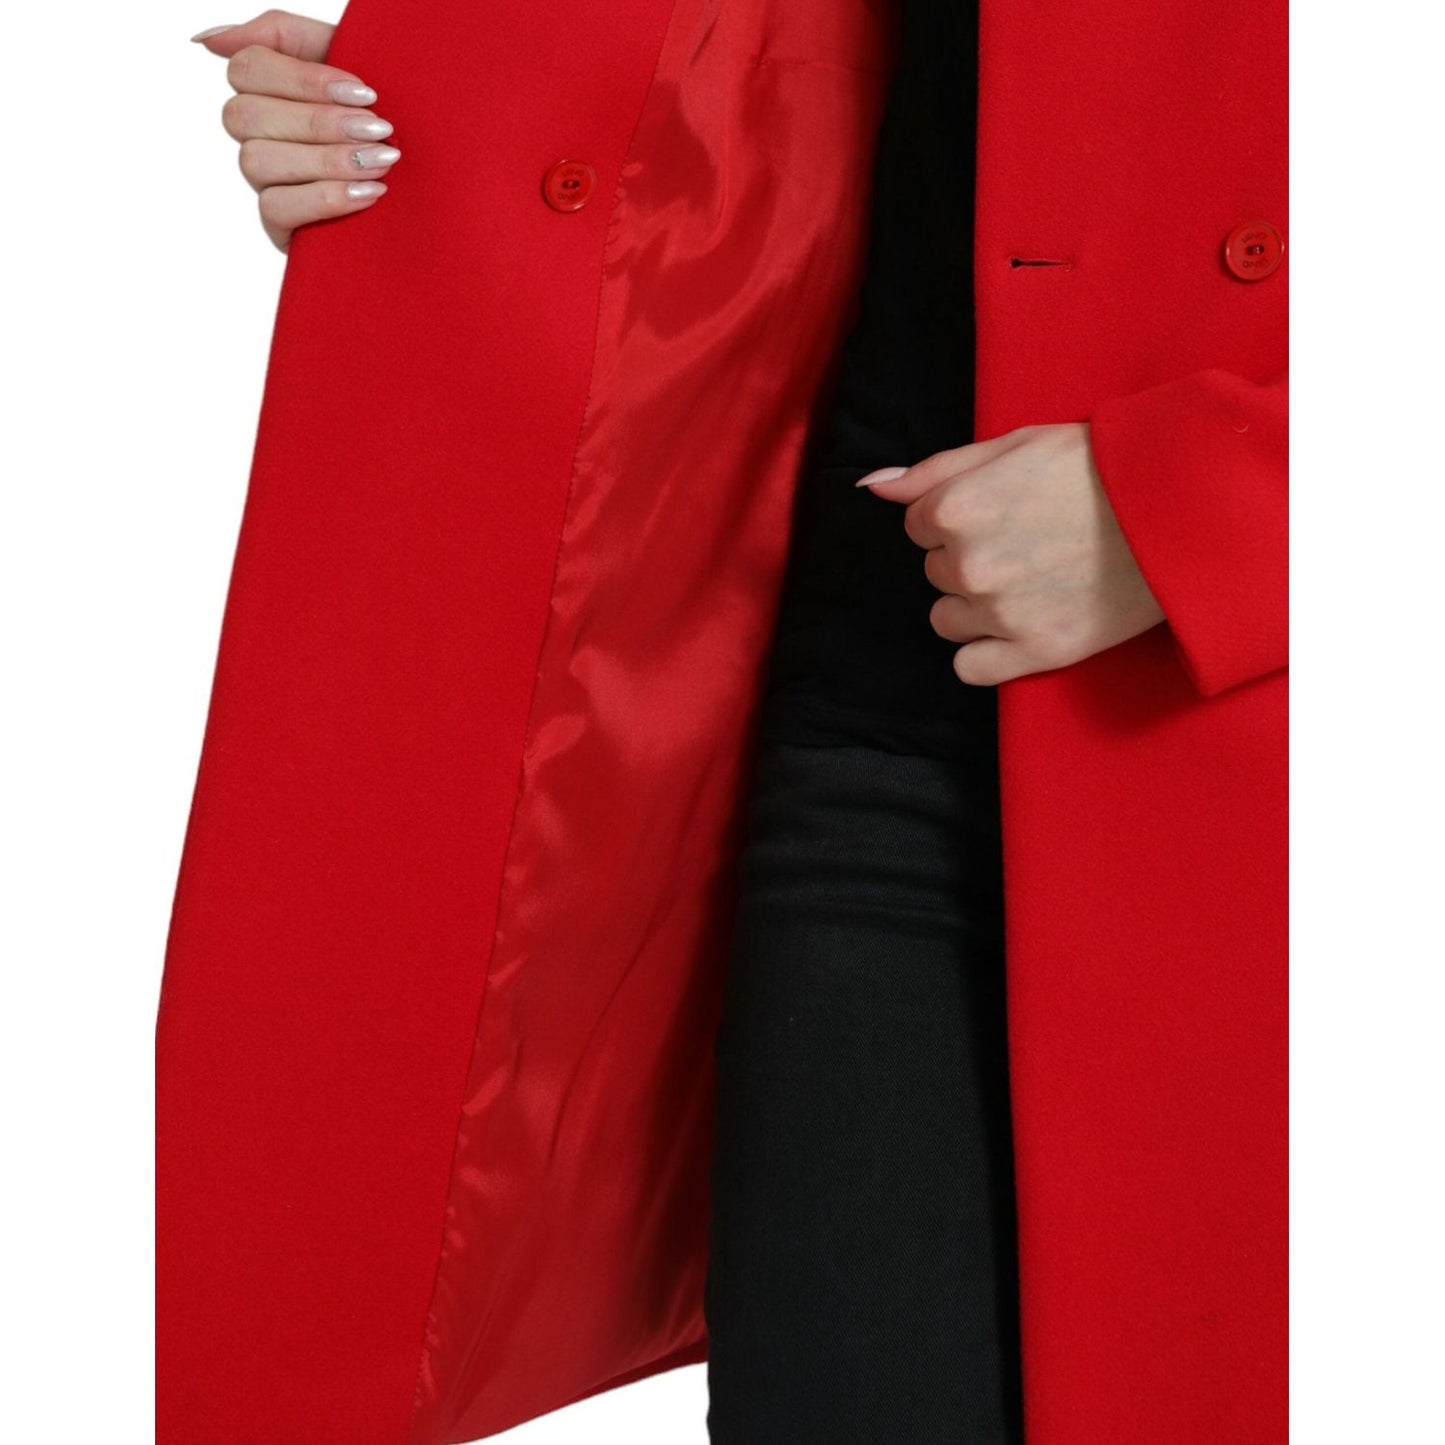 Liu Jo Elegant Red Double Breasted Long Coat red-wool-double-breasted-long-sleeves-coat-jacket